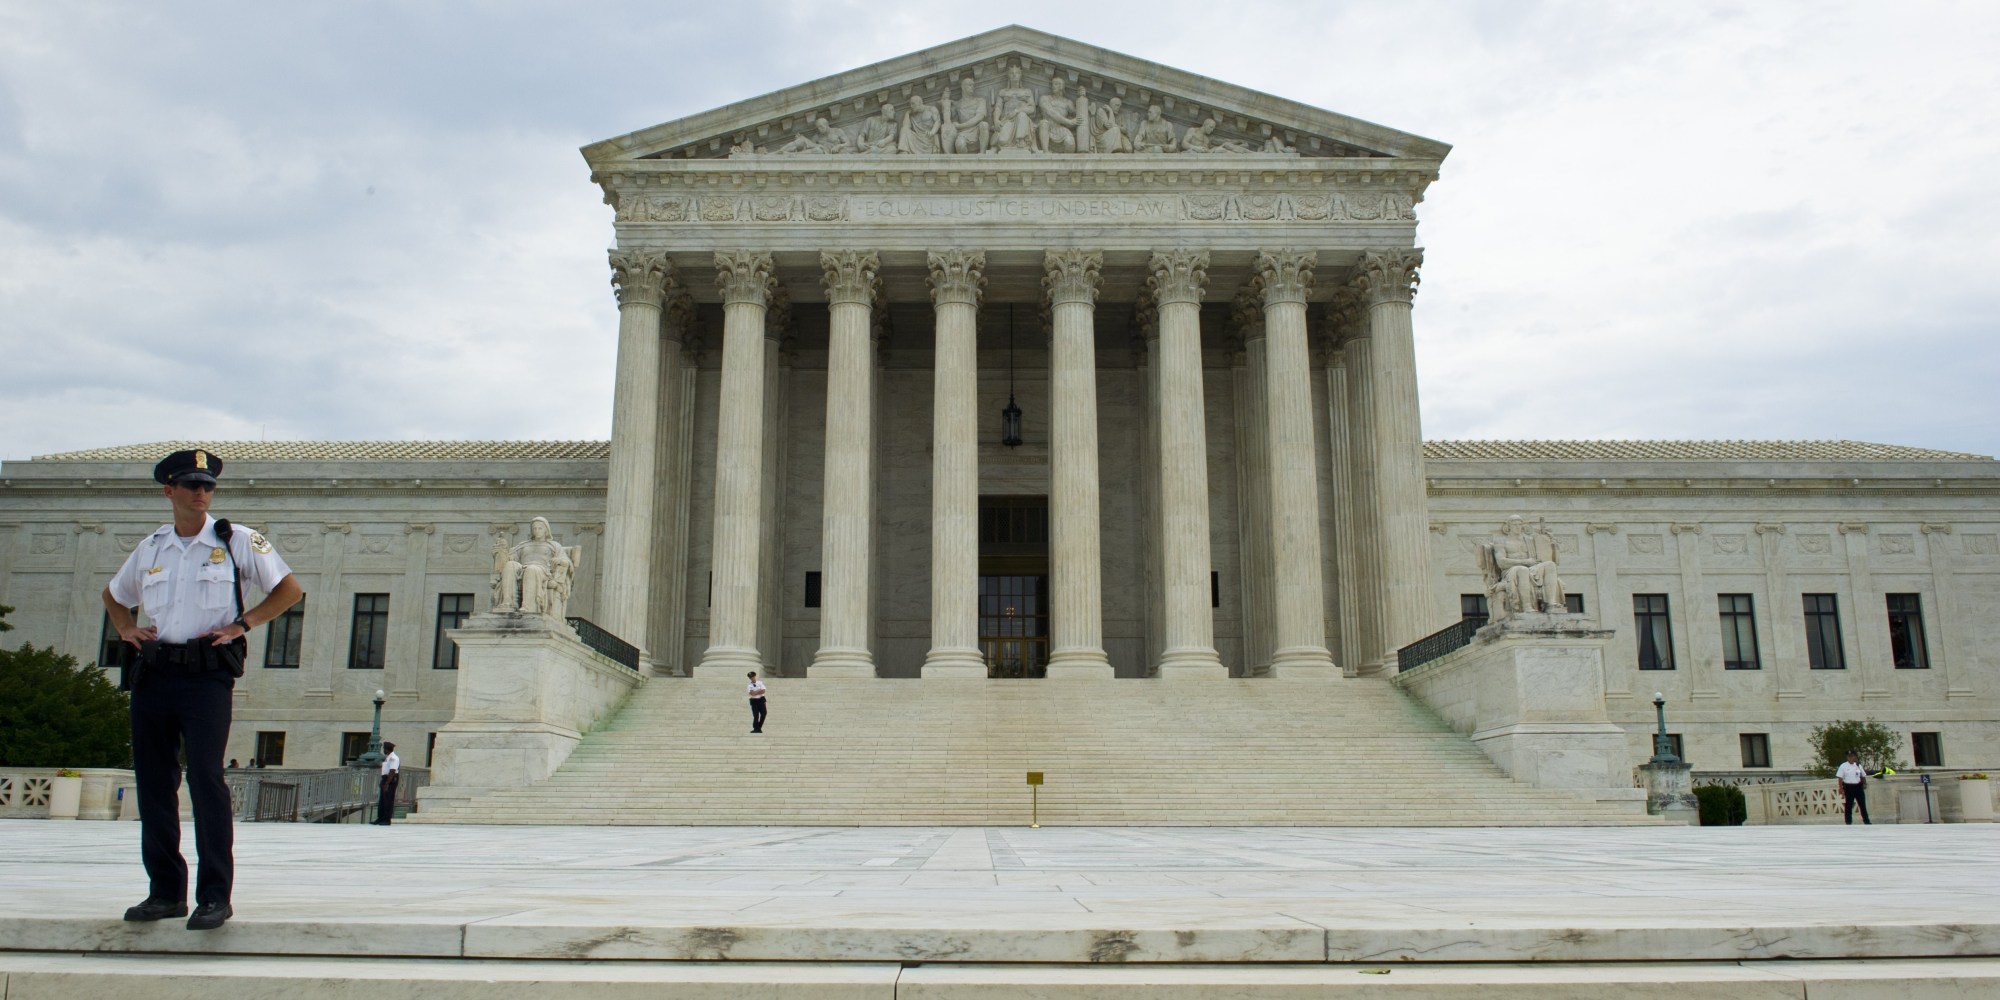 The US Supreme Court is seen in this June 19, 2014 photo in Washington, DC. AFP PHOTO / Karen BLEIER (Photo credit should read KAREN BLEIER/AFP/Getty Images)